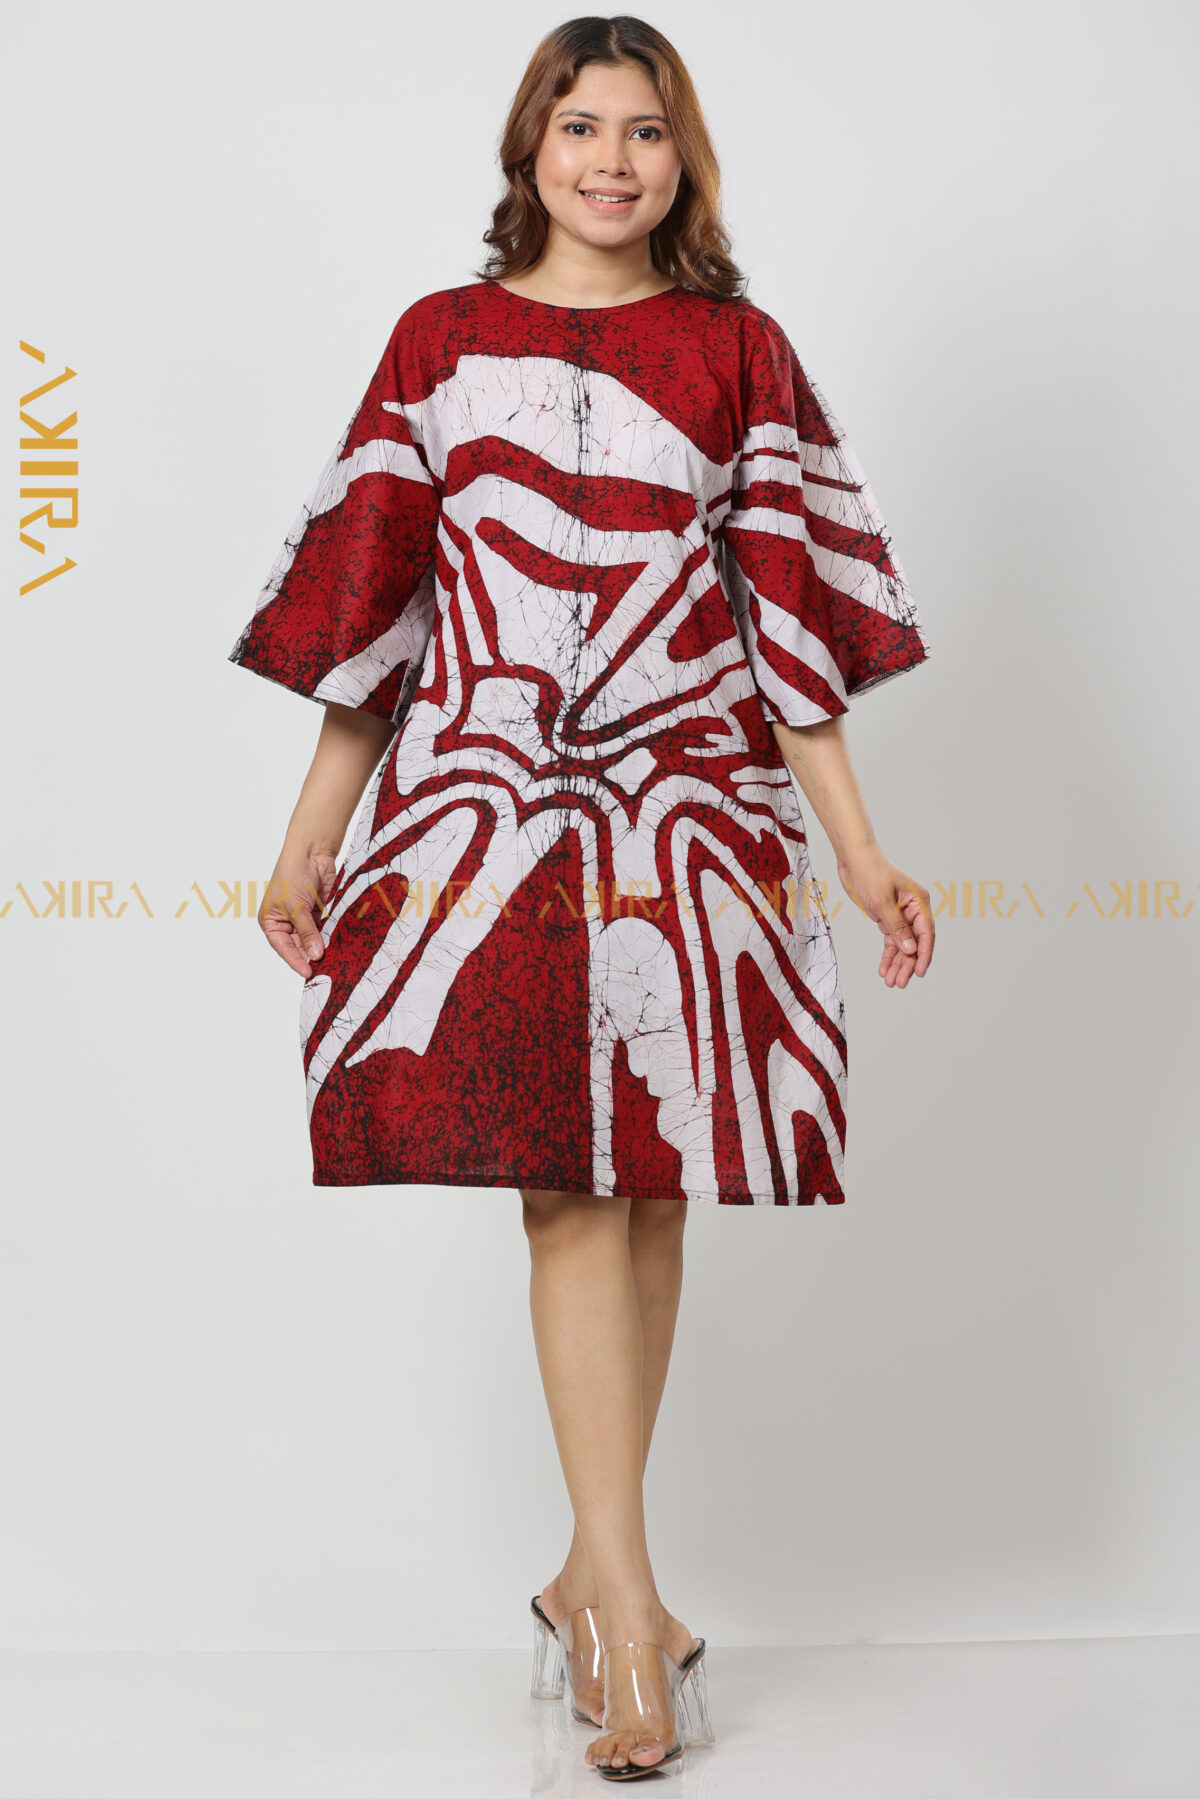 Eliora Maroony Dress for Women